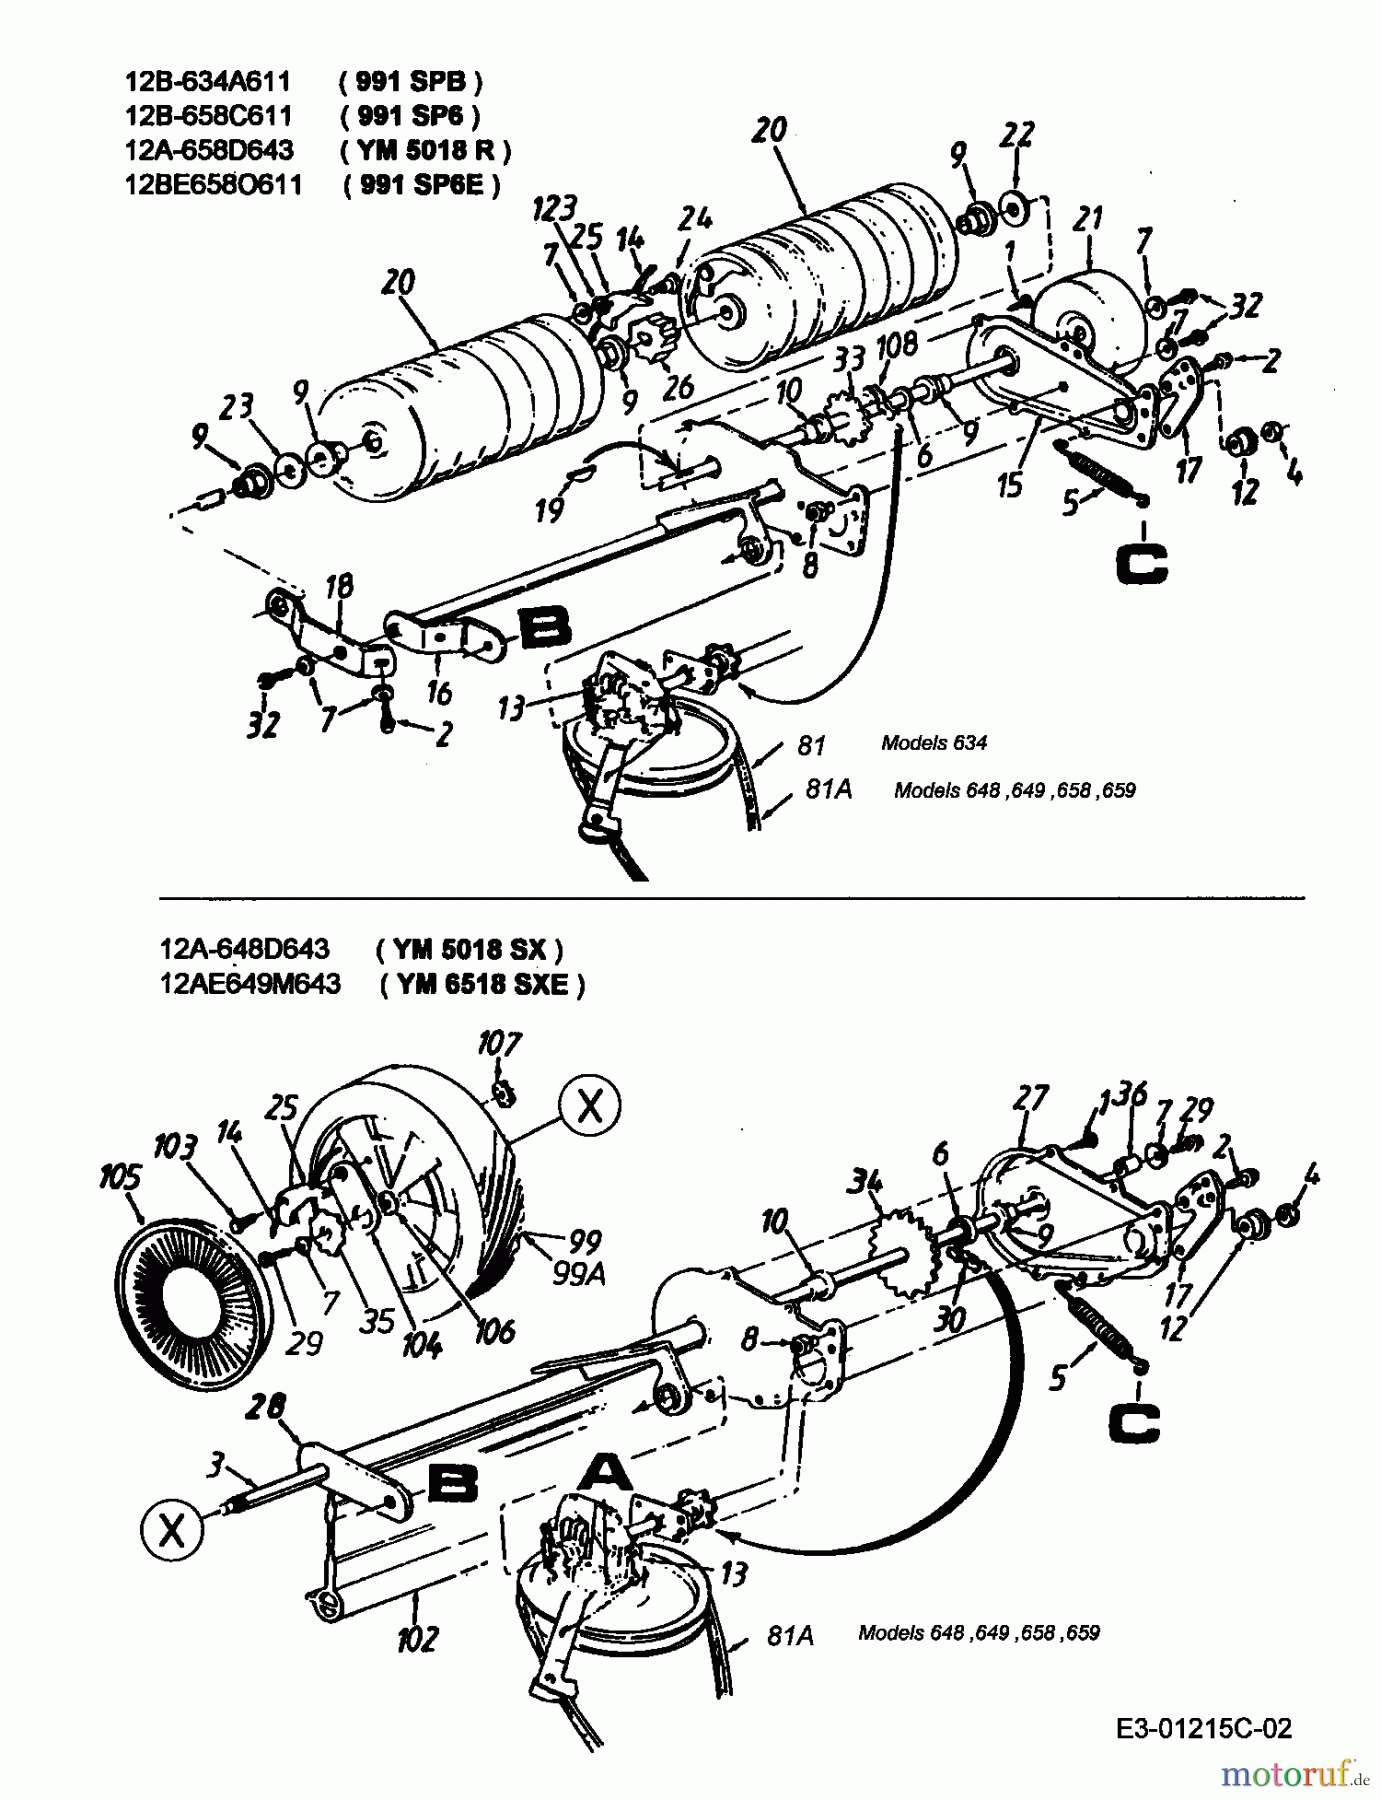  Lawnflite Petrol mower self propelled 991 SP 6 E 12BE658O611  (2000) Gearbox, Rollers, Wheels